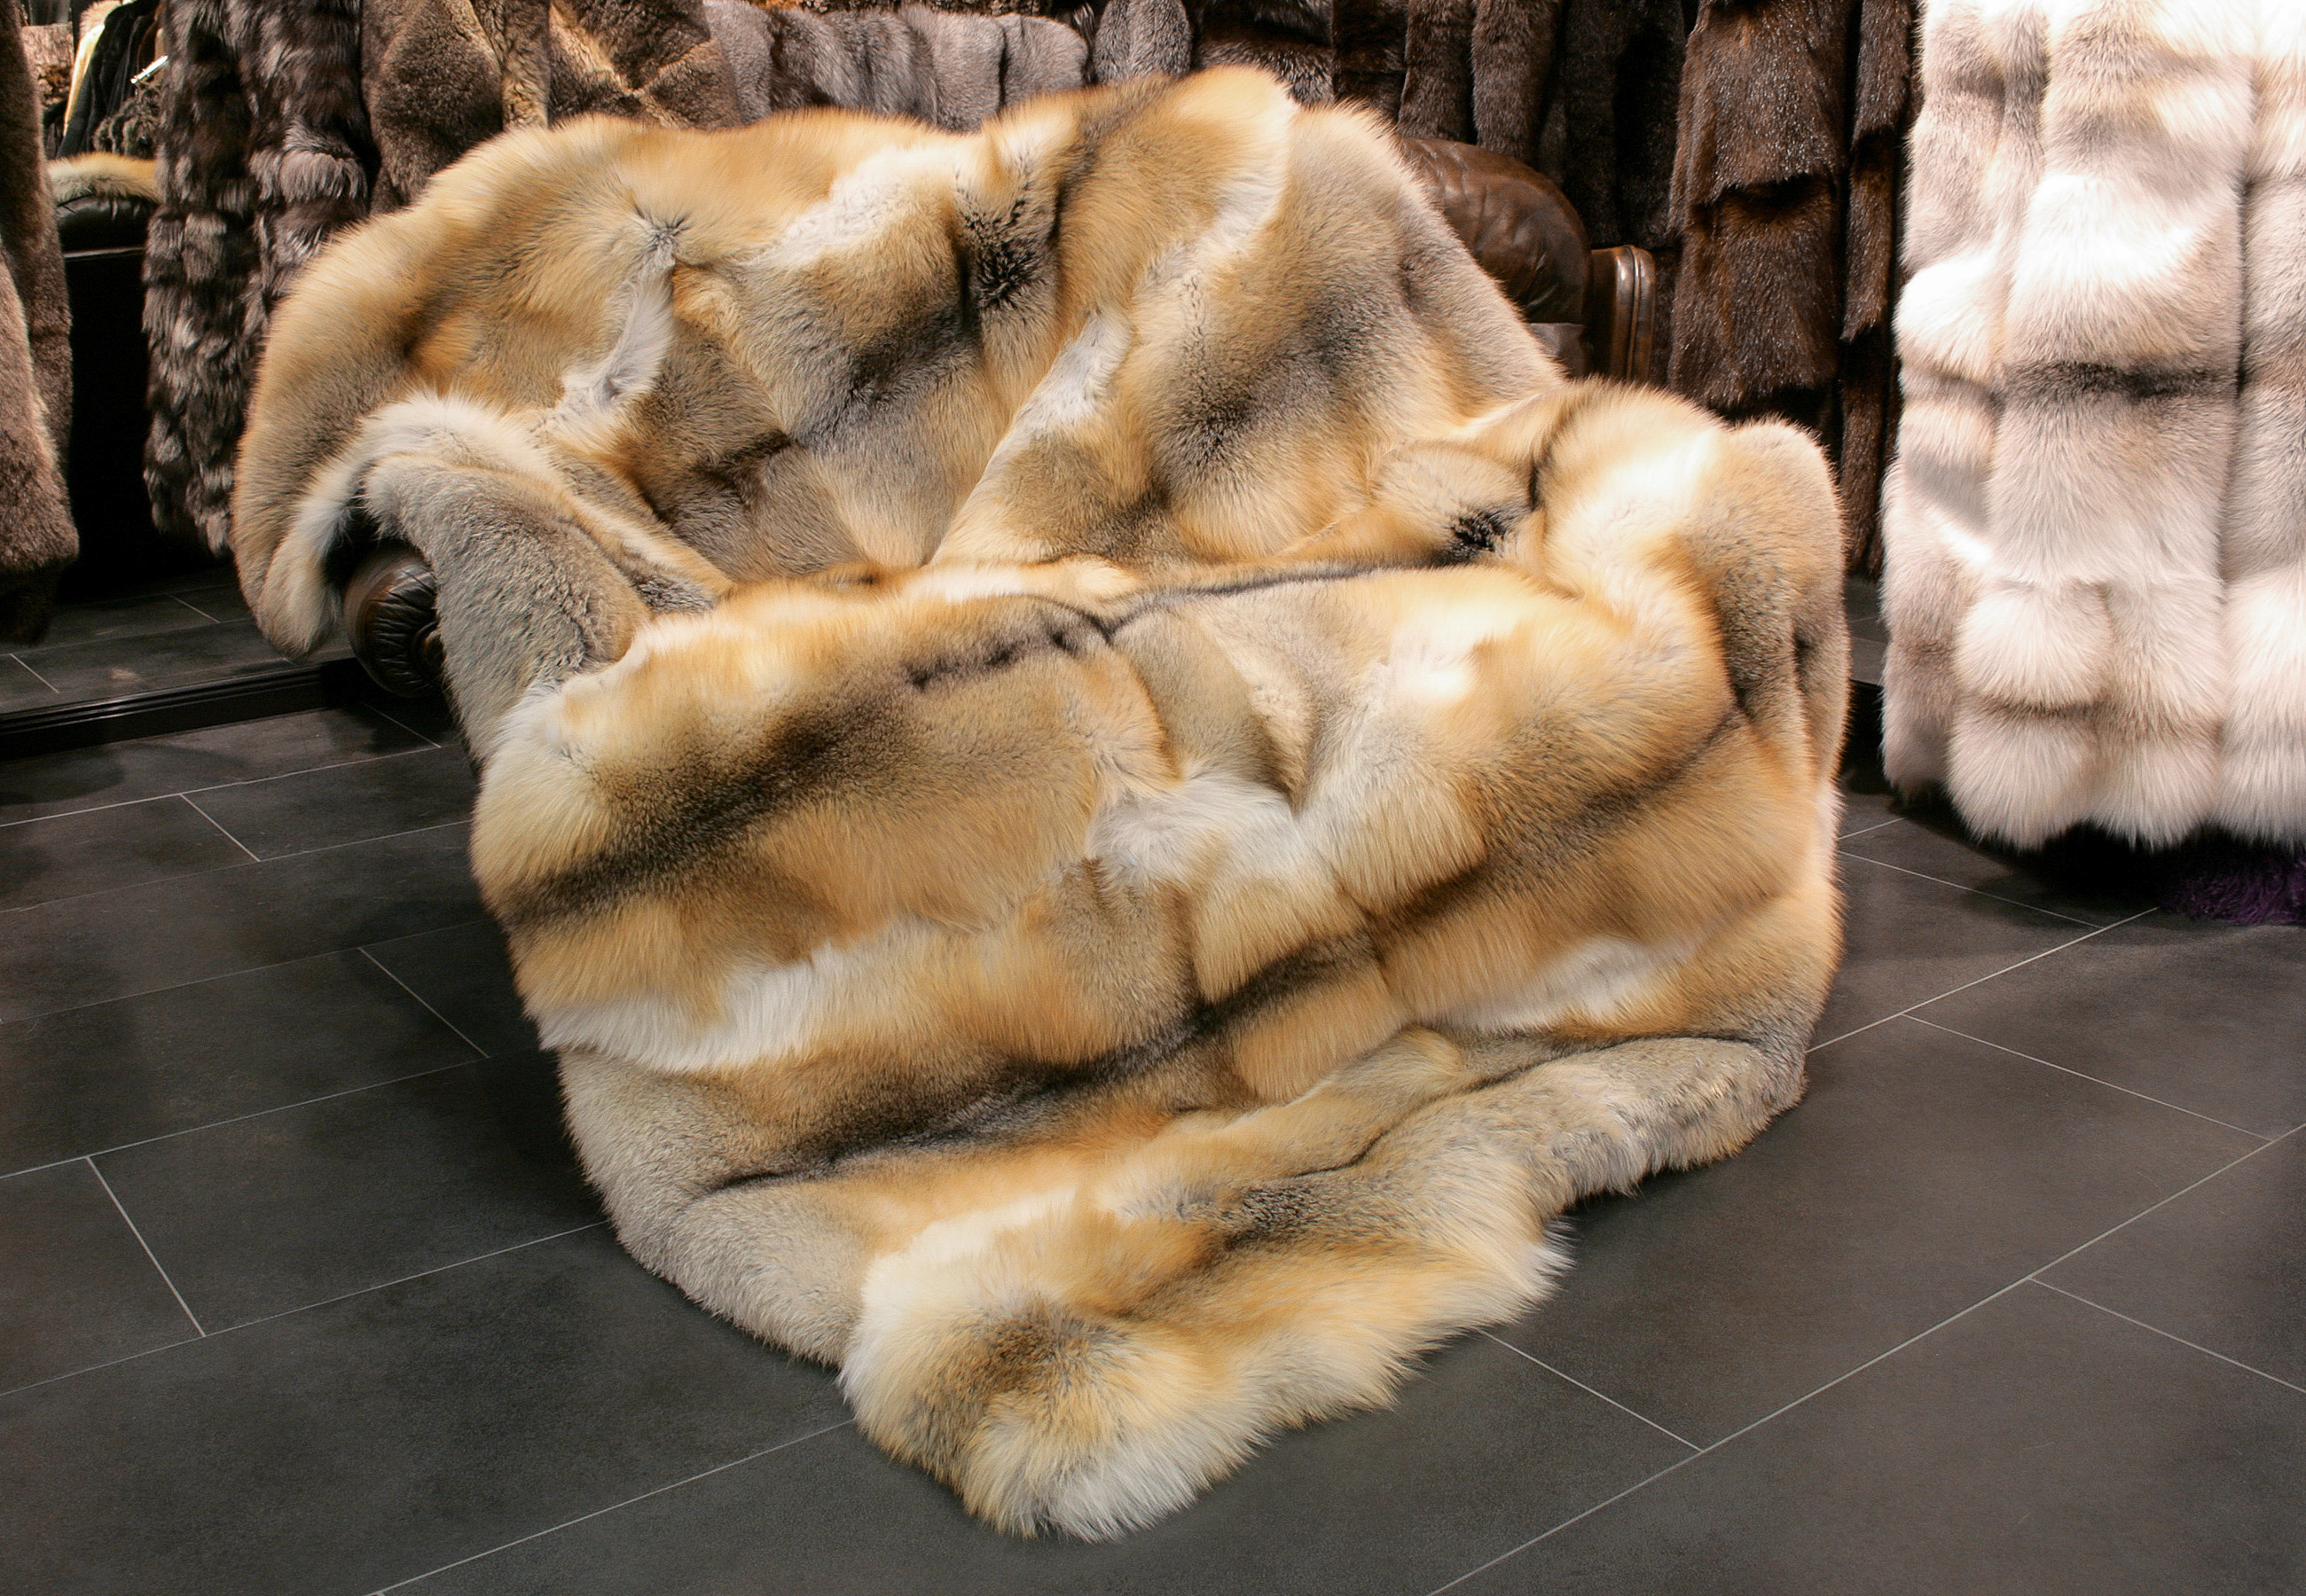 Golden island fox fur blanket - SAGA quality